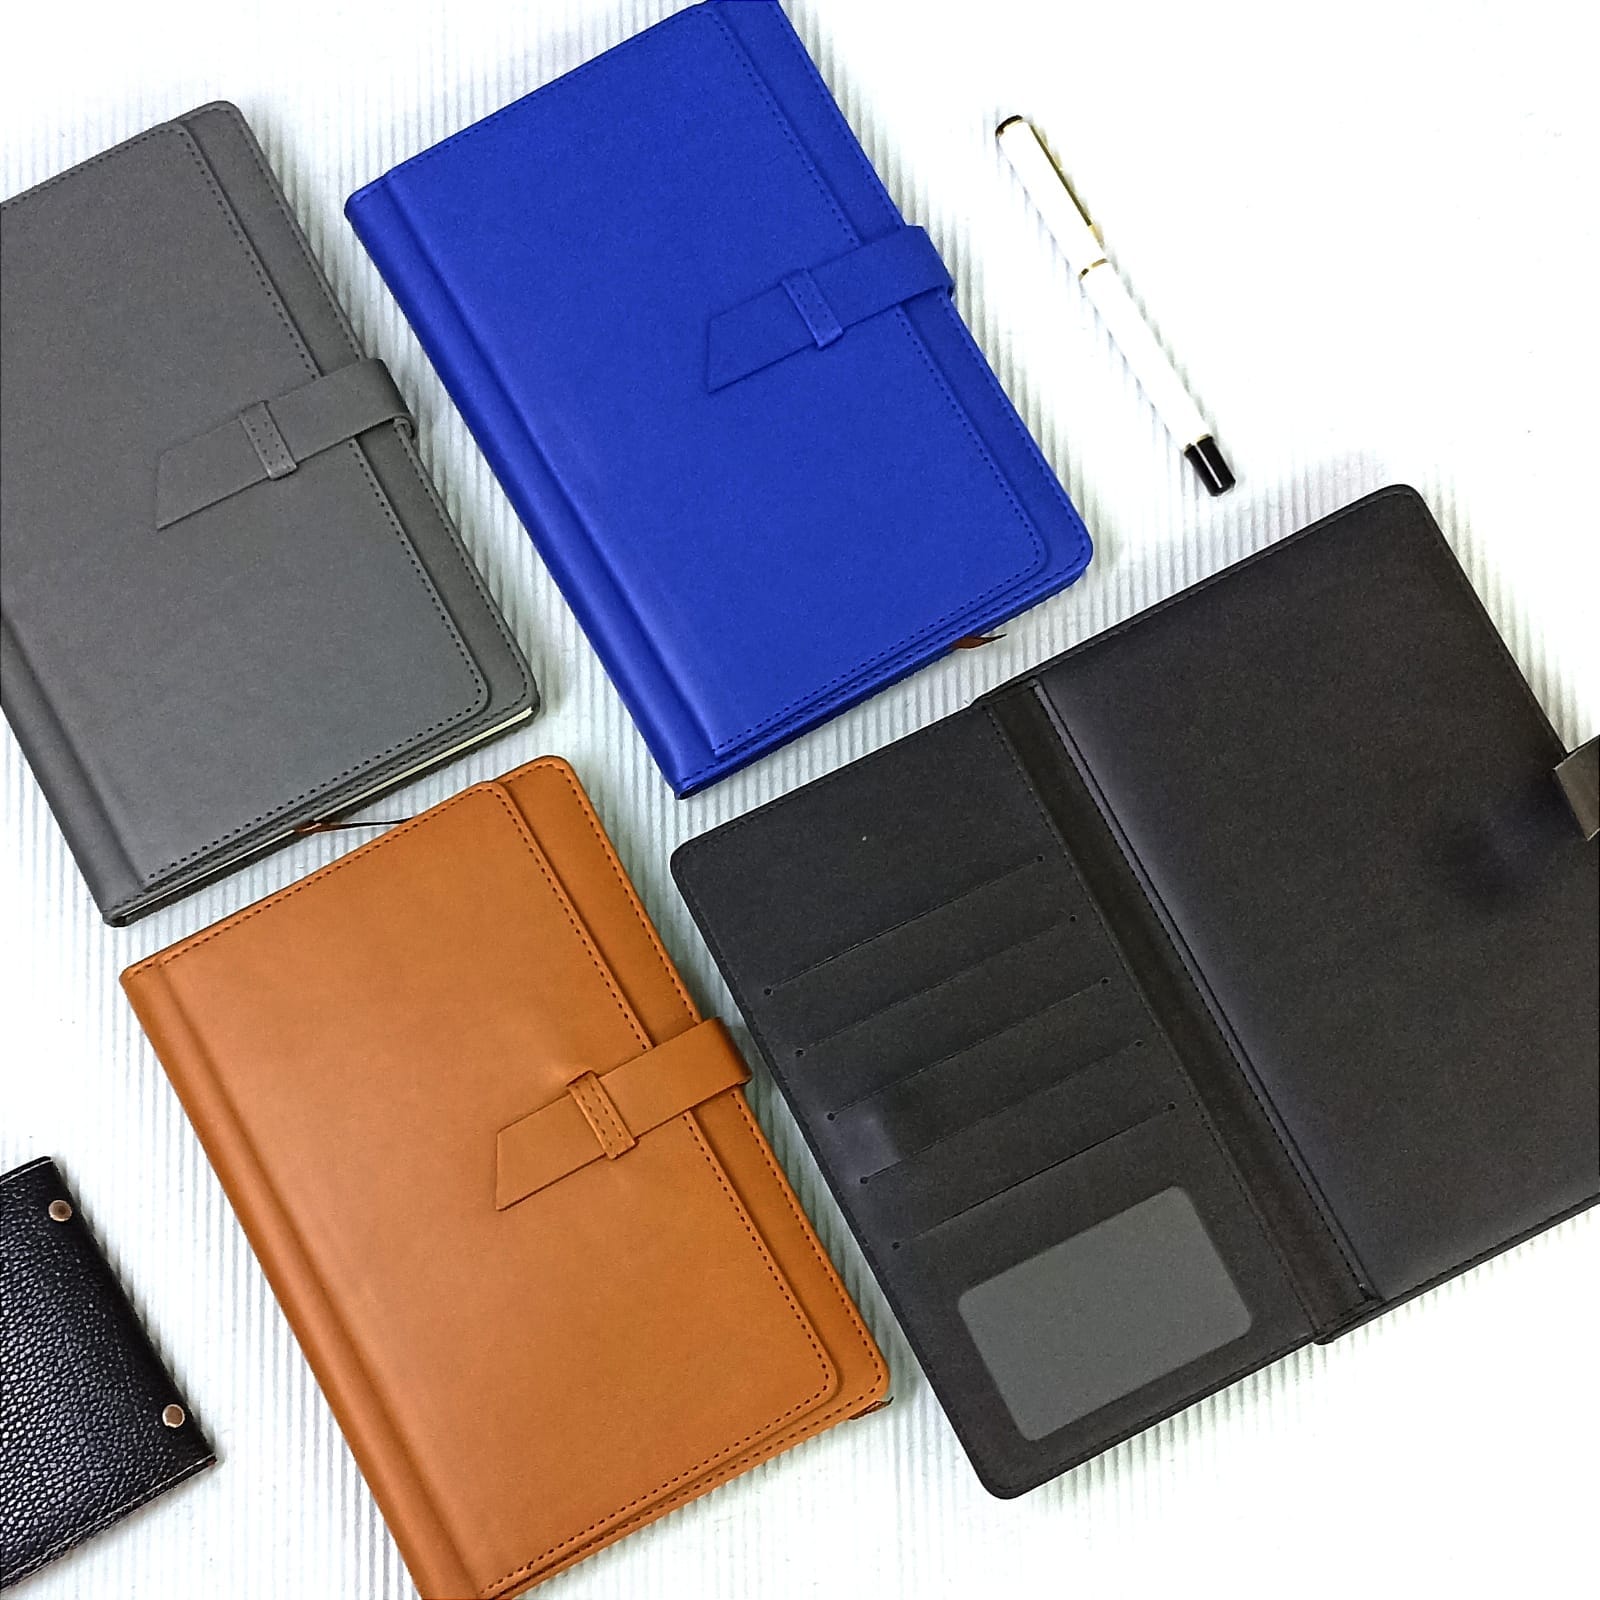 Notebooks2 